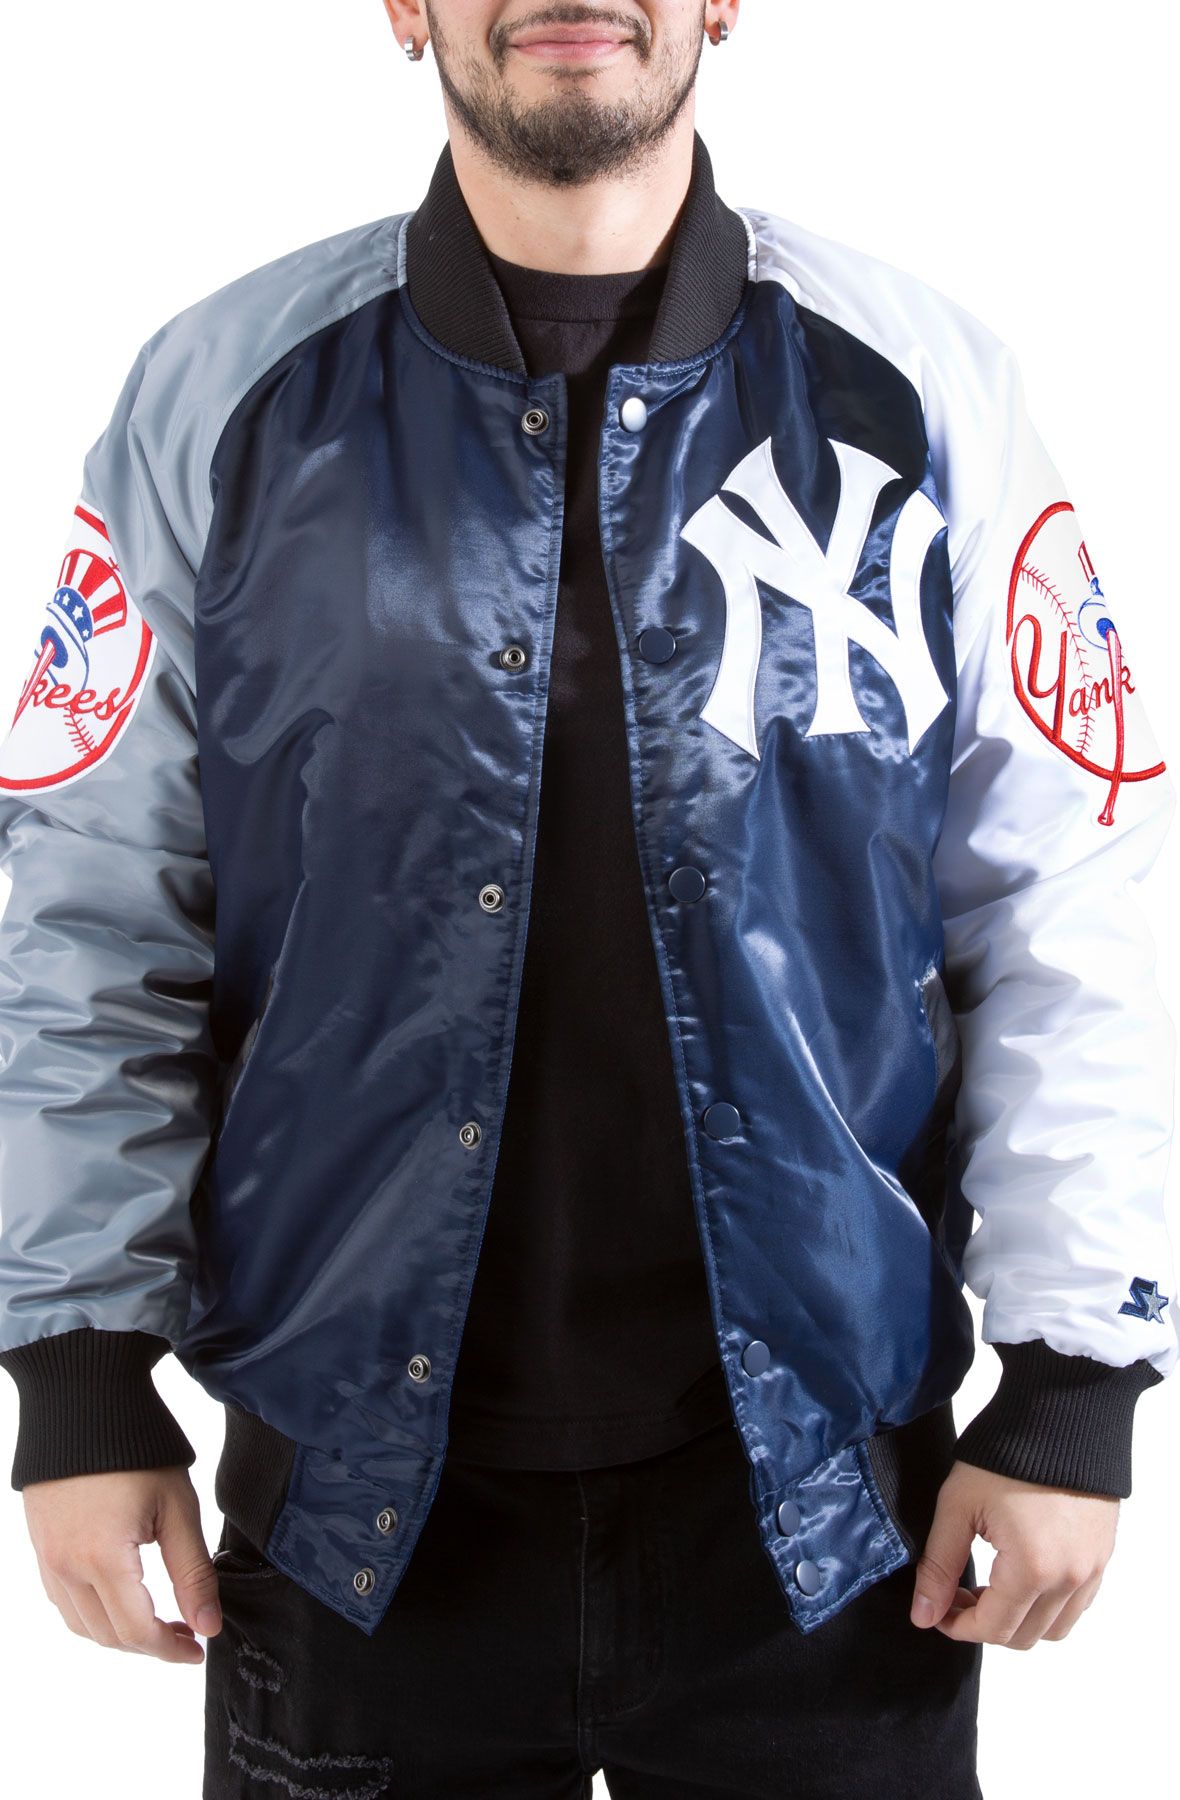 Maker of Jacket Men Jackets New York Navy Blue Yankees Satin